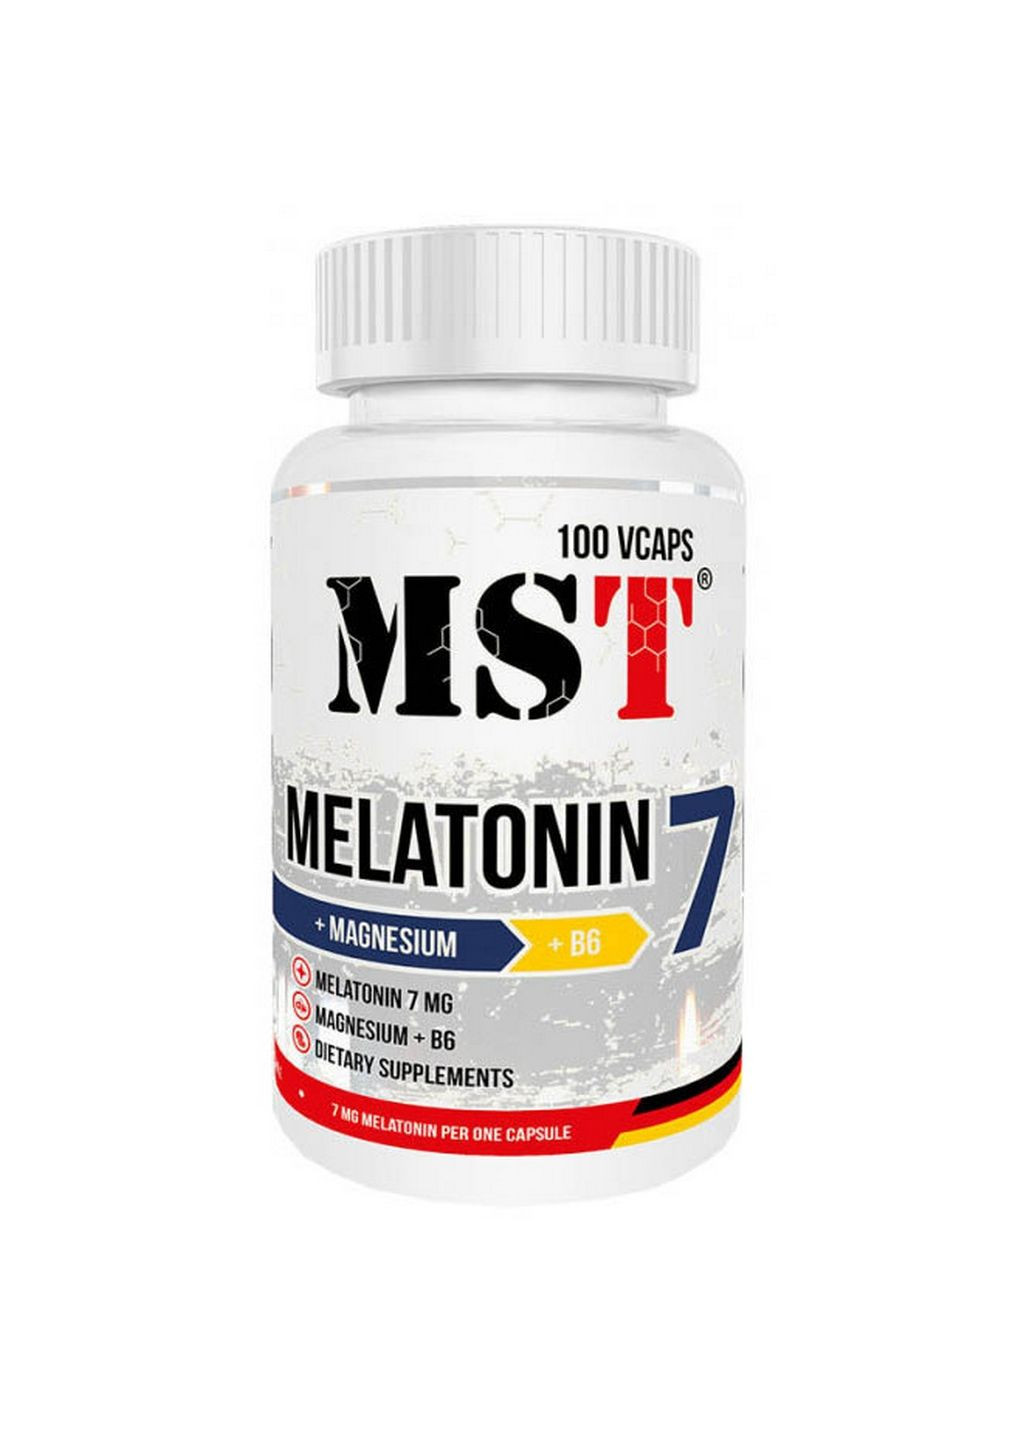 Натуральна добавка Melatonin 7 + Magnesium + B6, 100 вегакапсул MST (293420662)